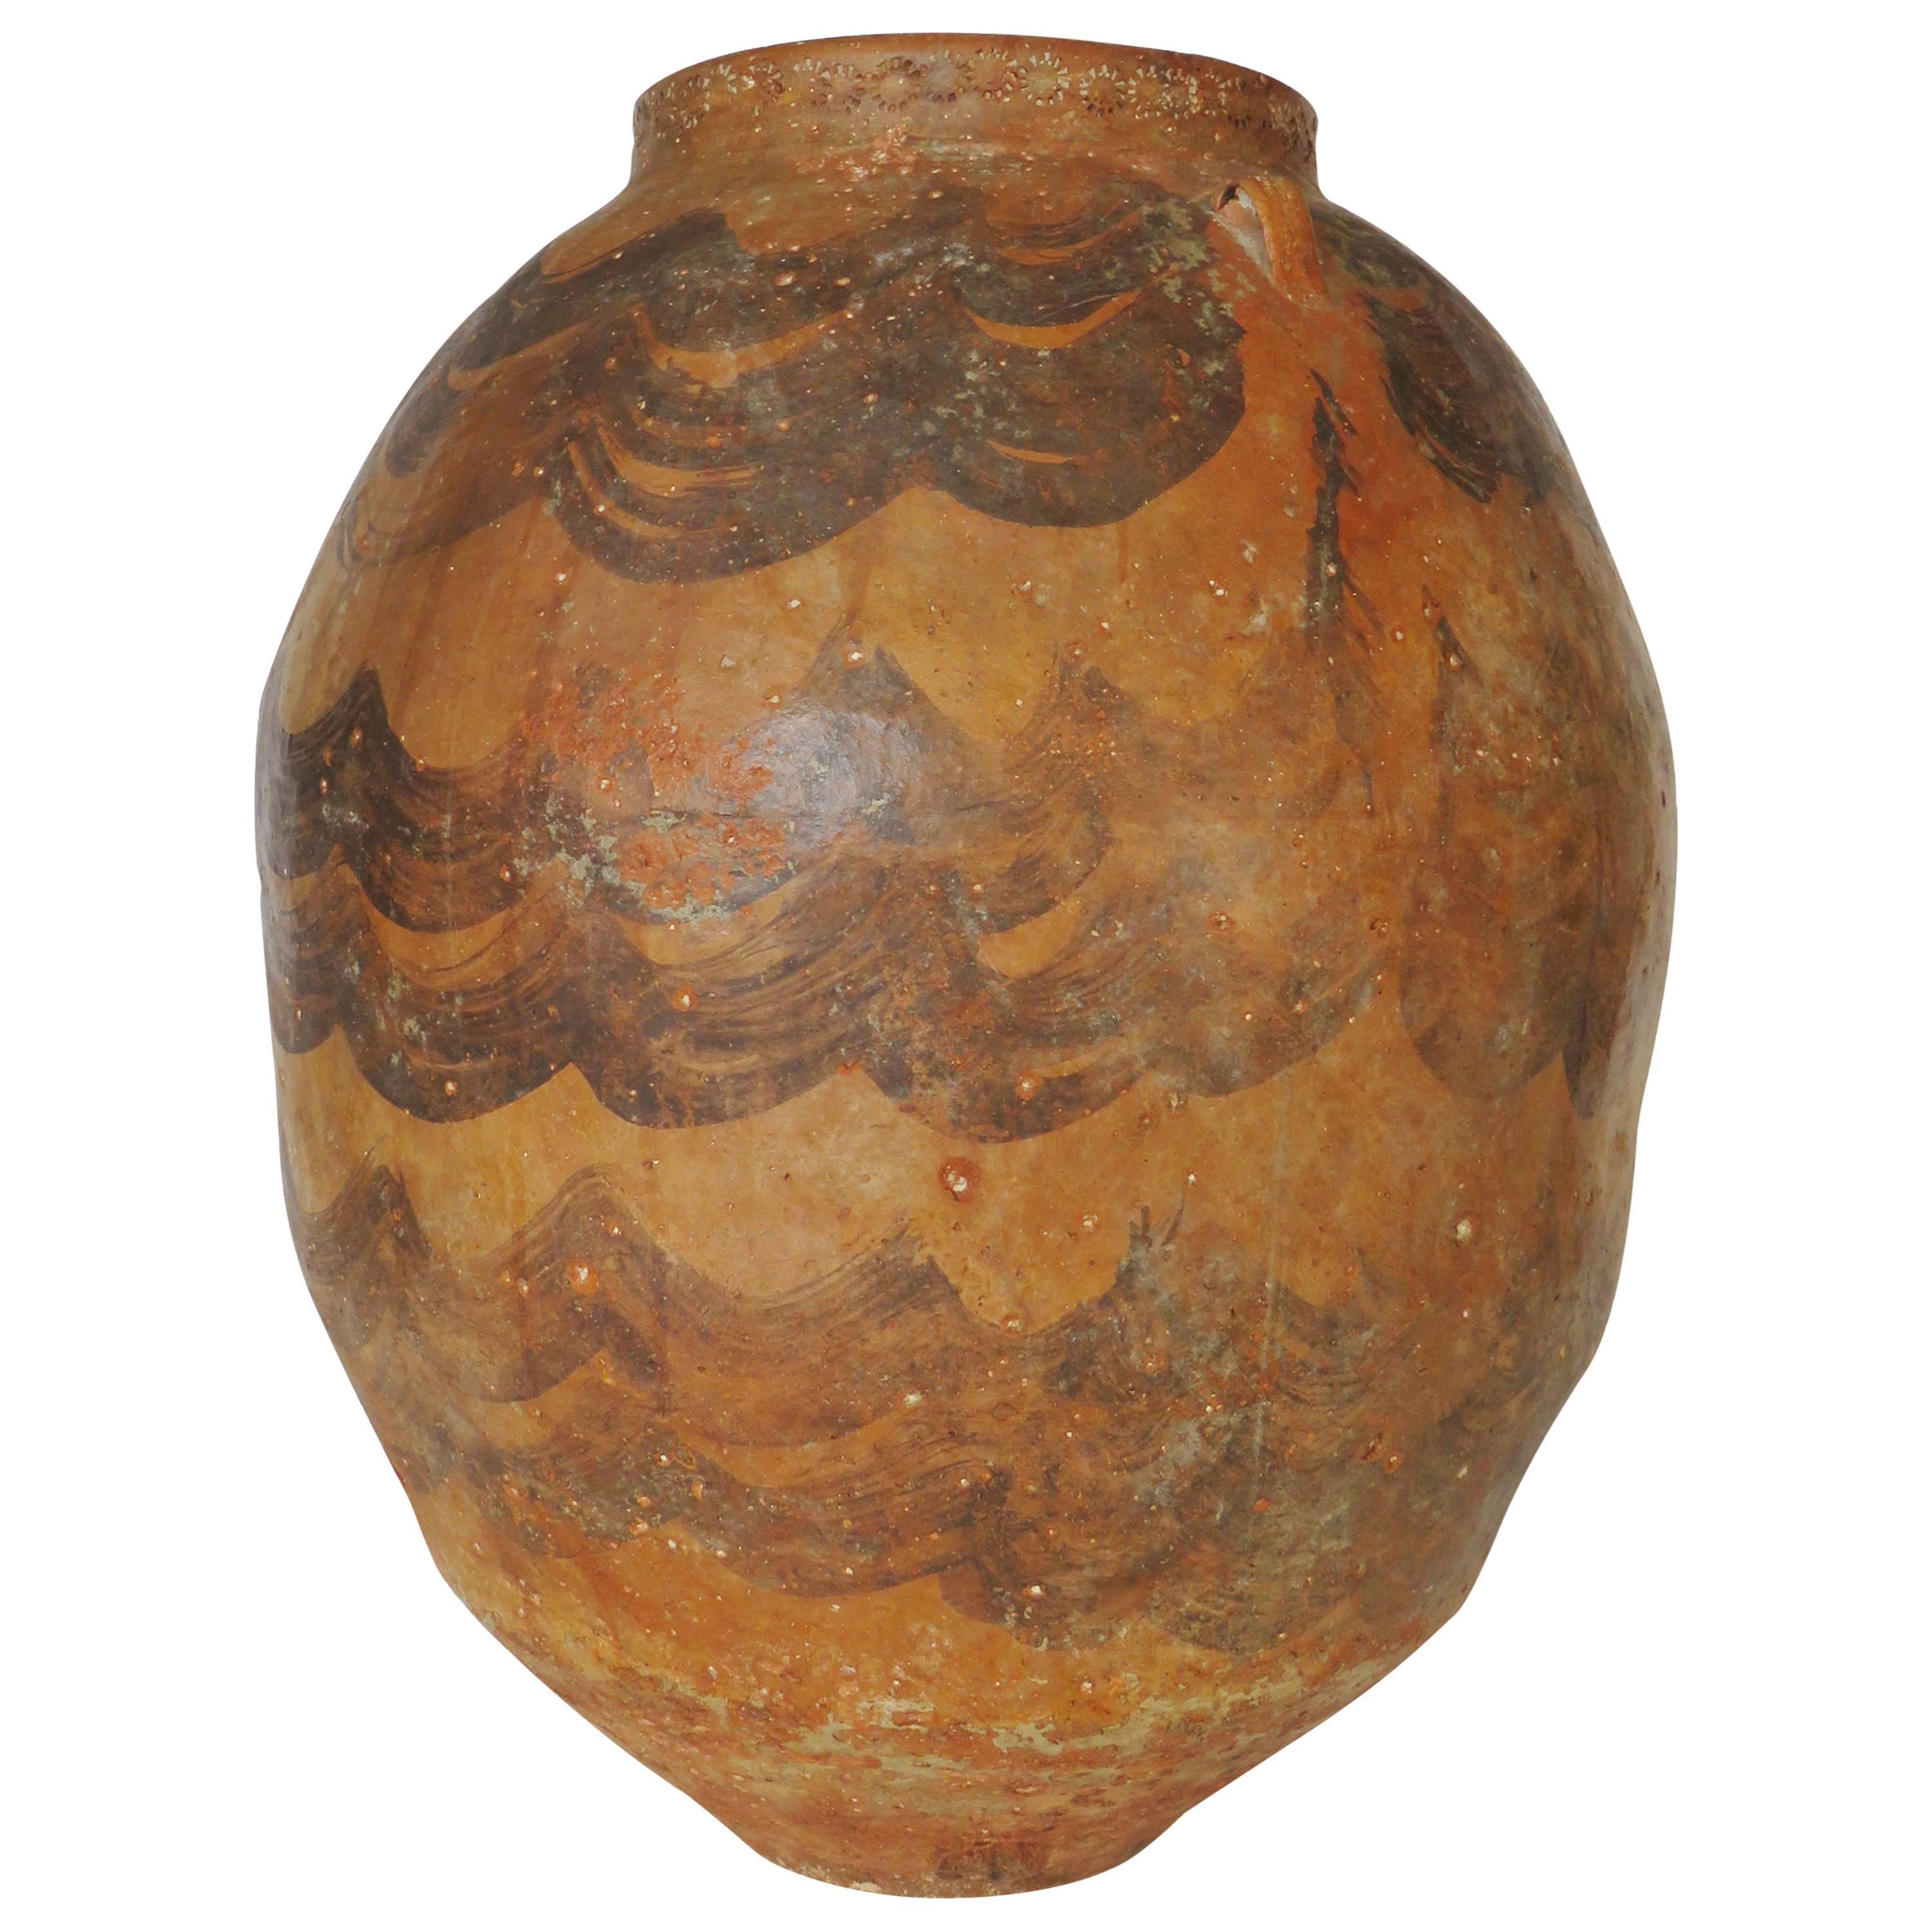 Mid-17th Century Mozarab Terracotta Jar